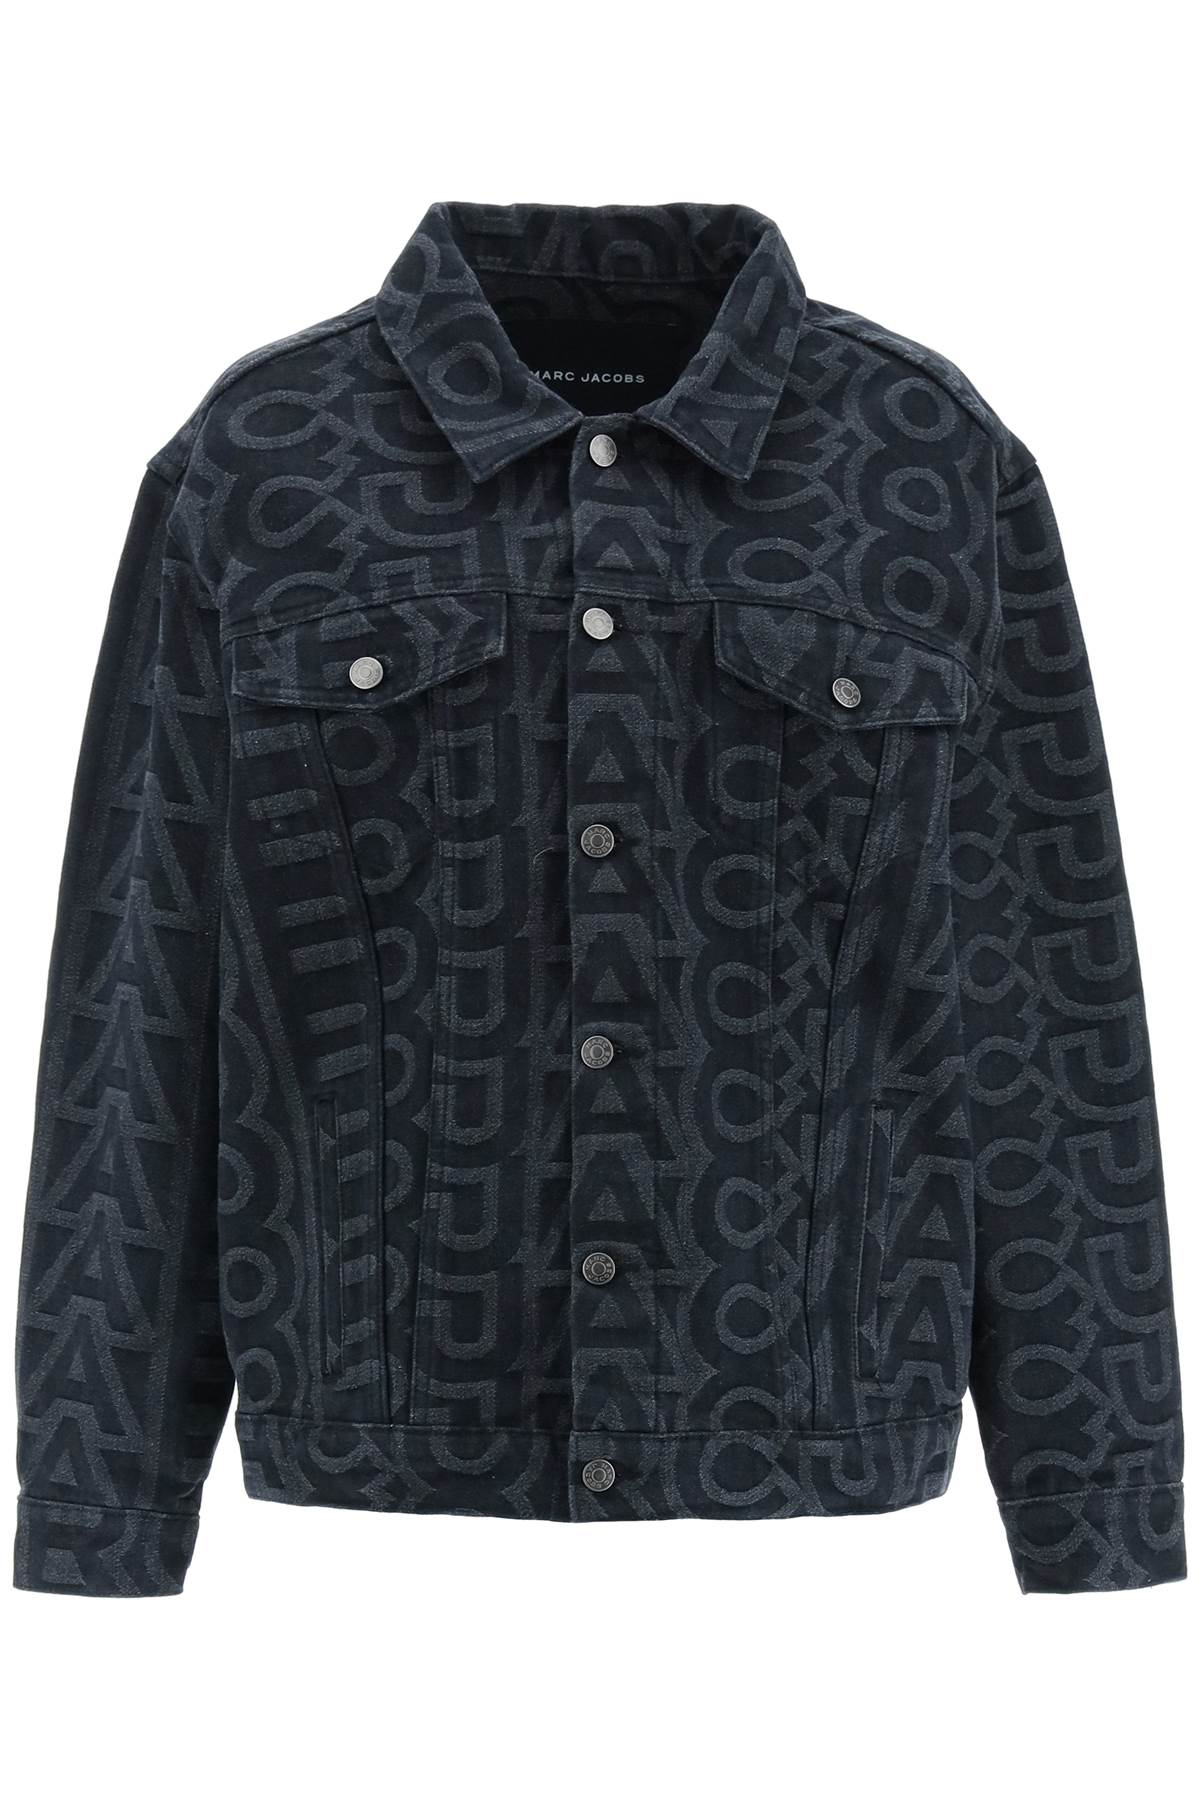 Louis Vuitton Denim Overshirt BLACK. Size M0